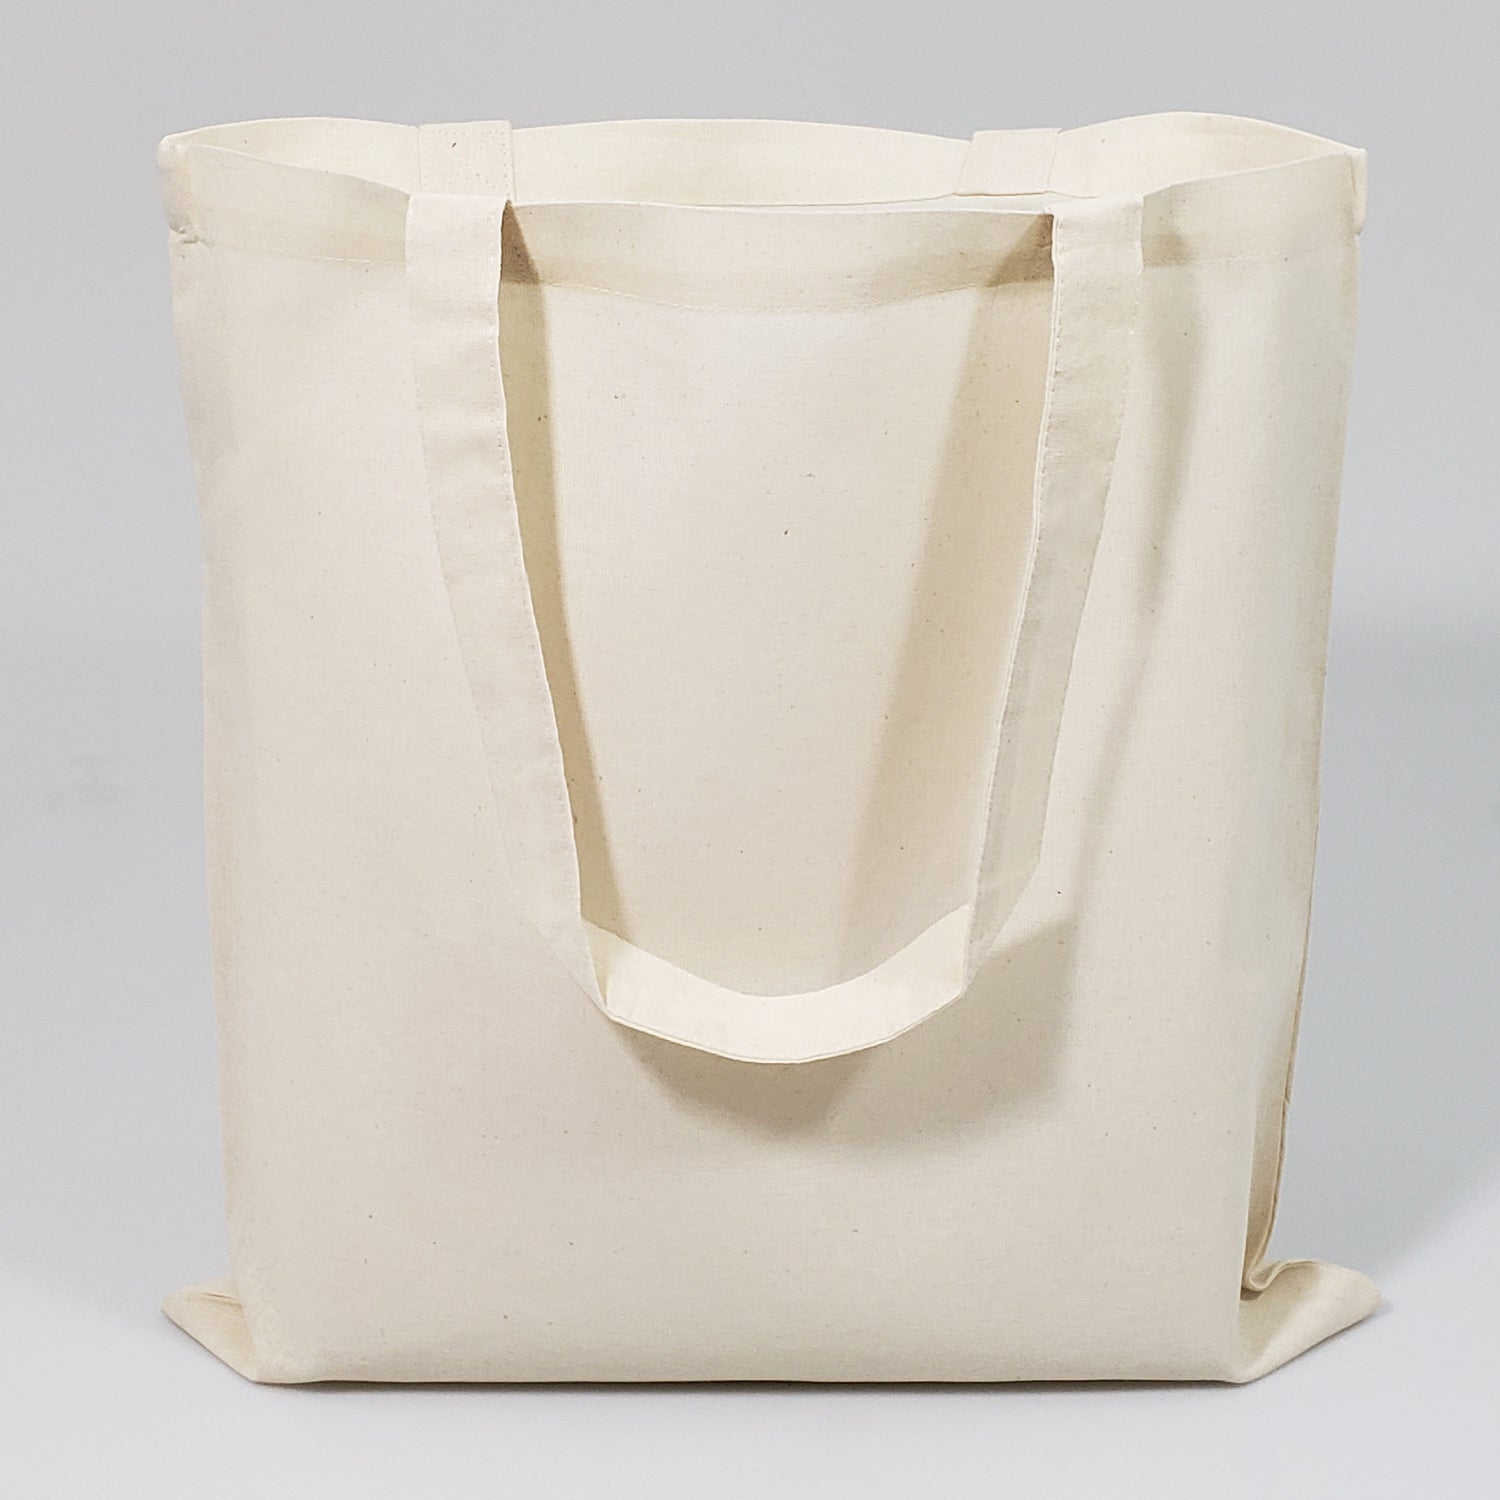 Branded paper bags custom printed | Pixartprinting